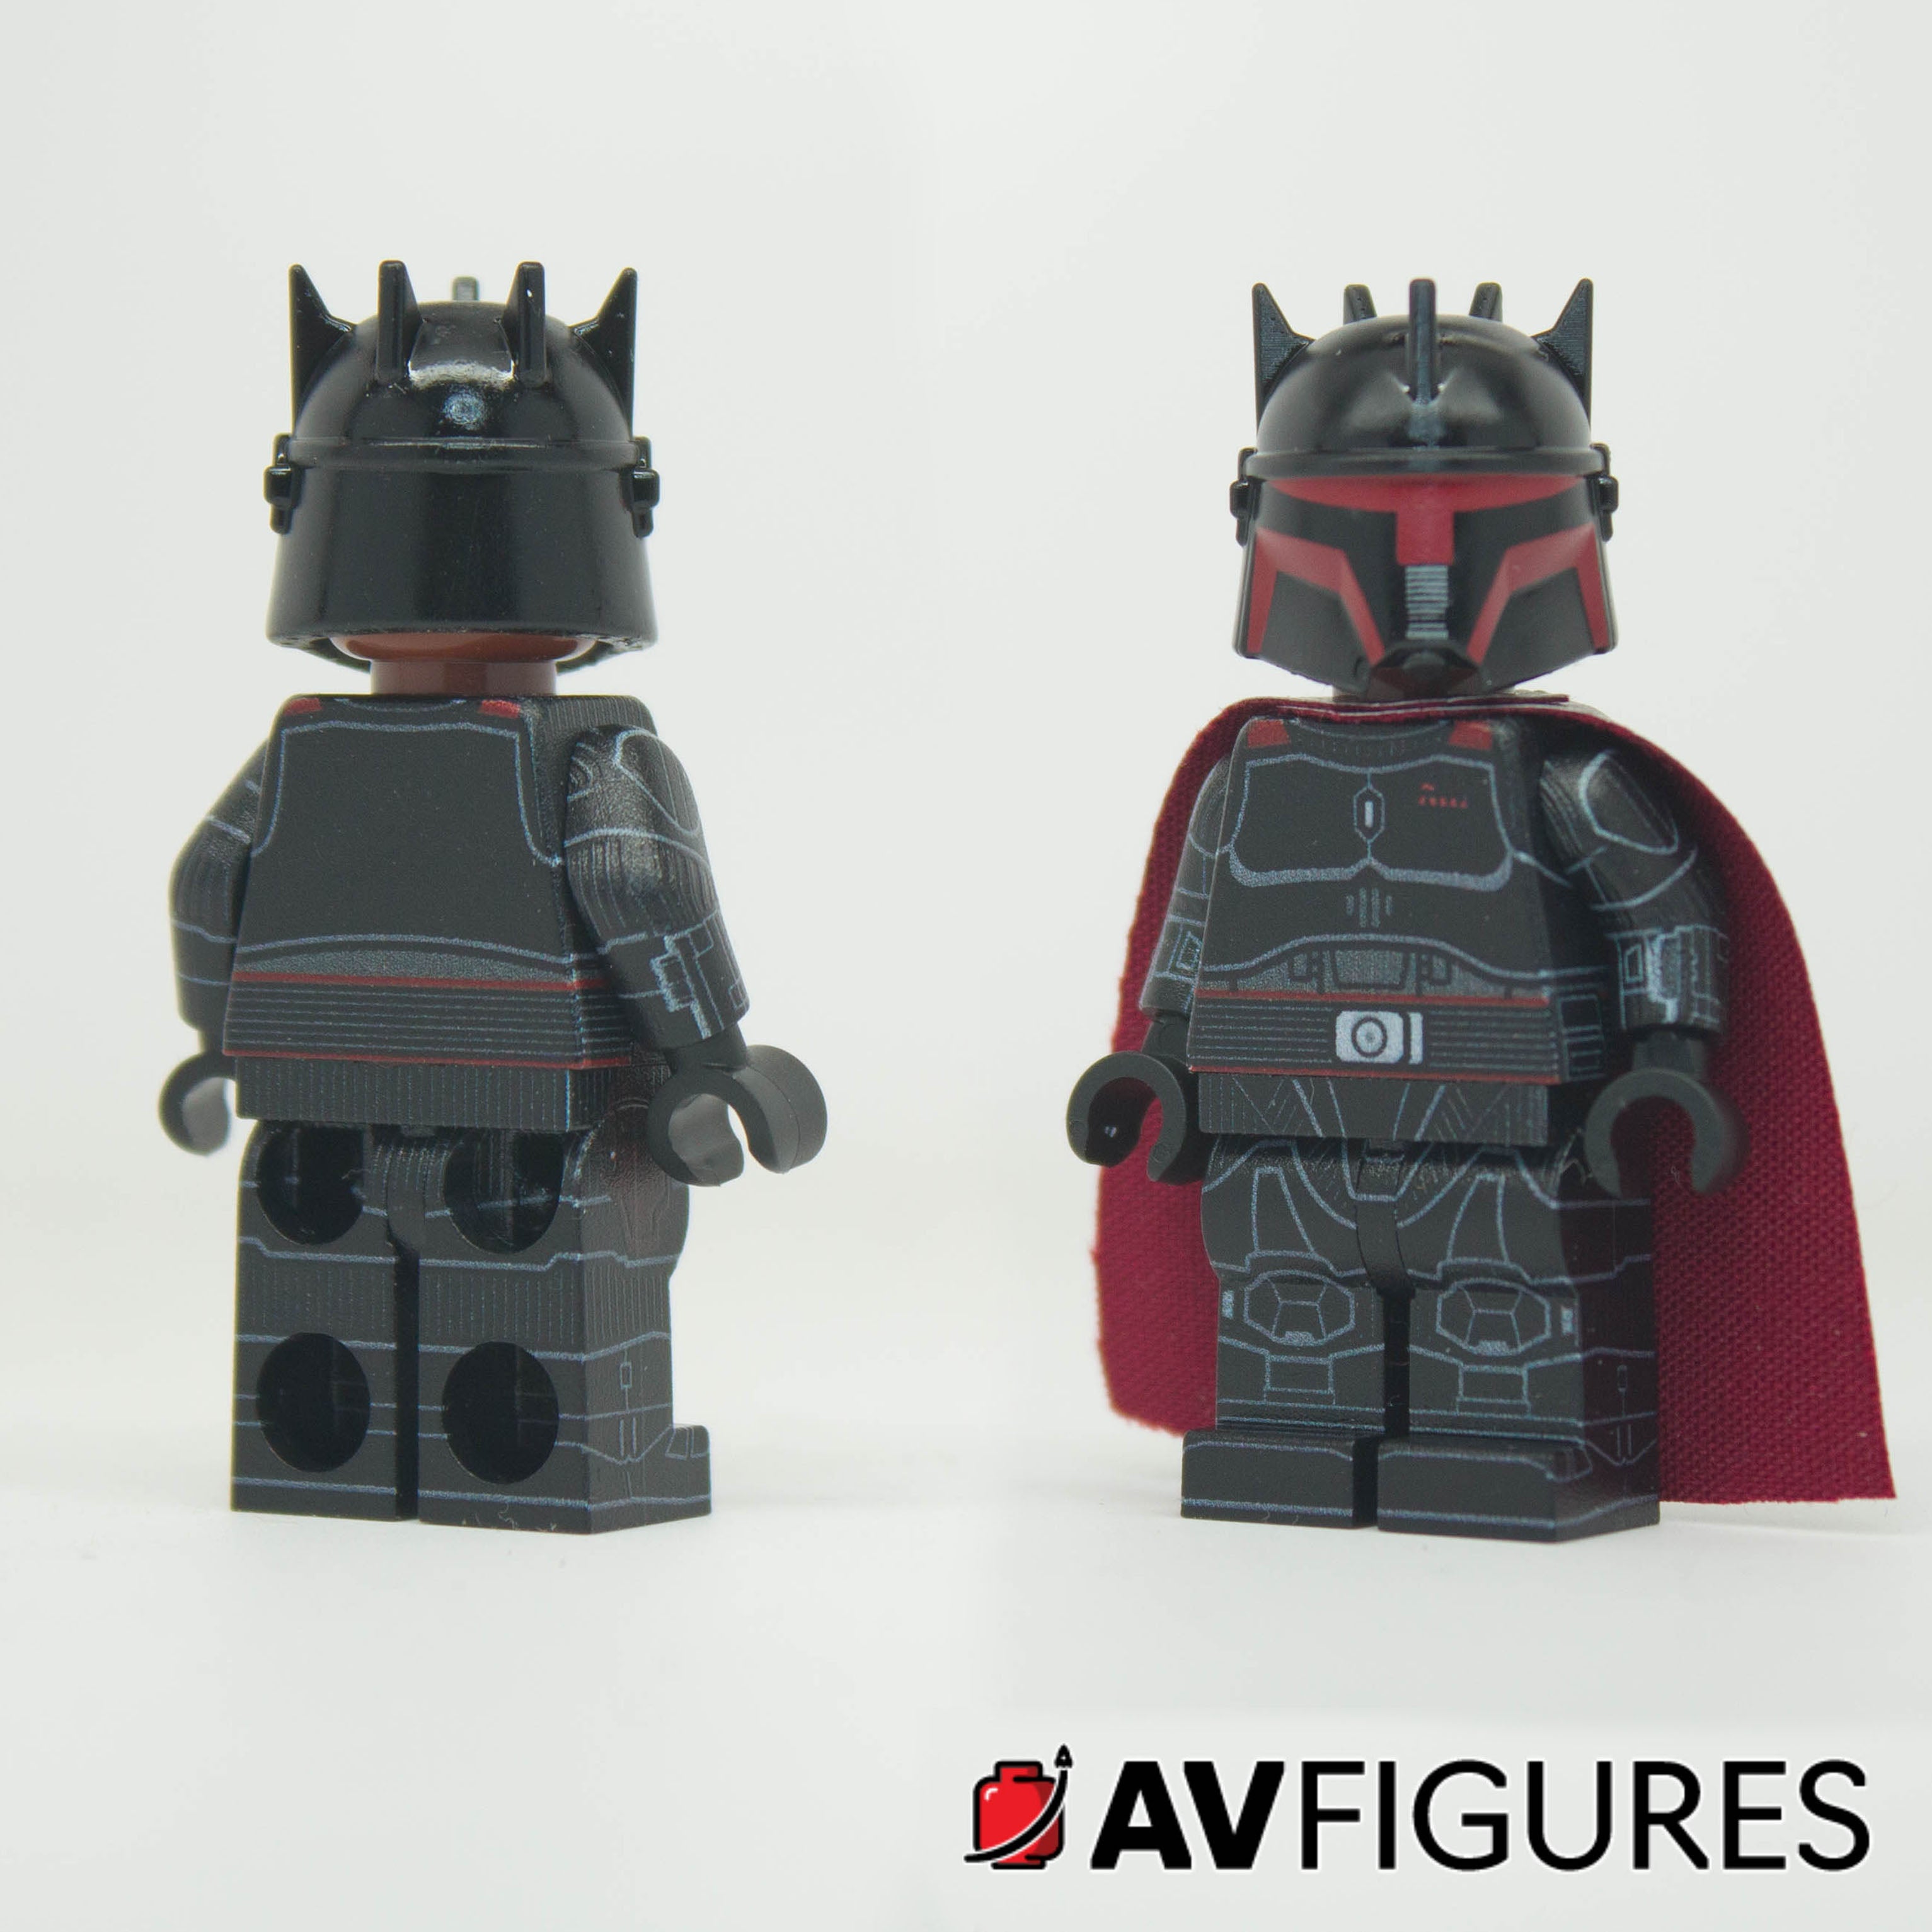 Moff Gideon - Dark Trooper Armor Printed Figure